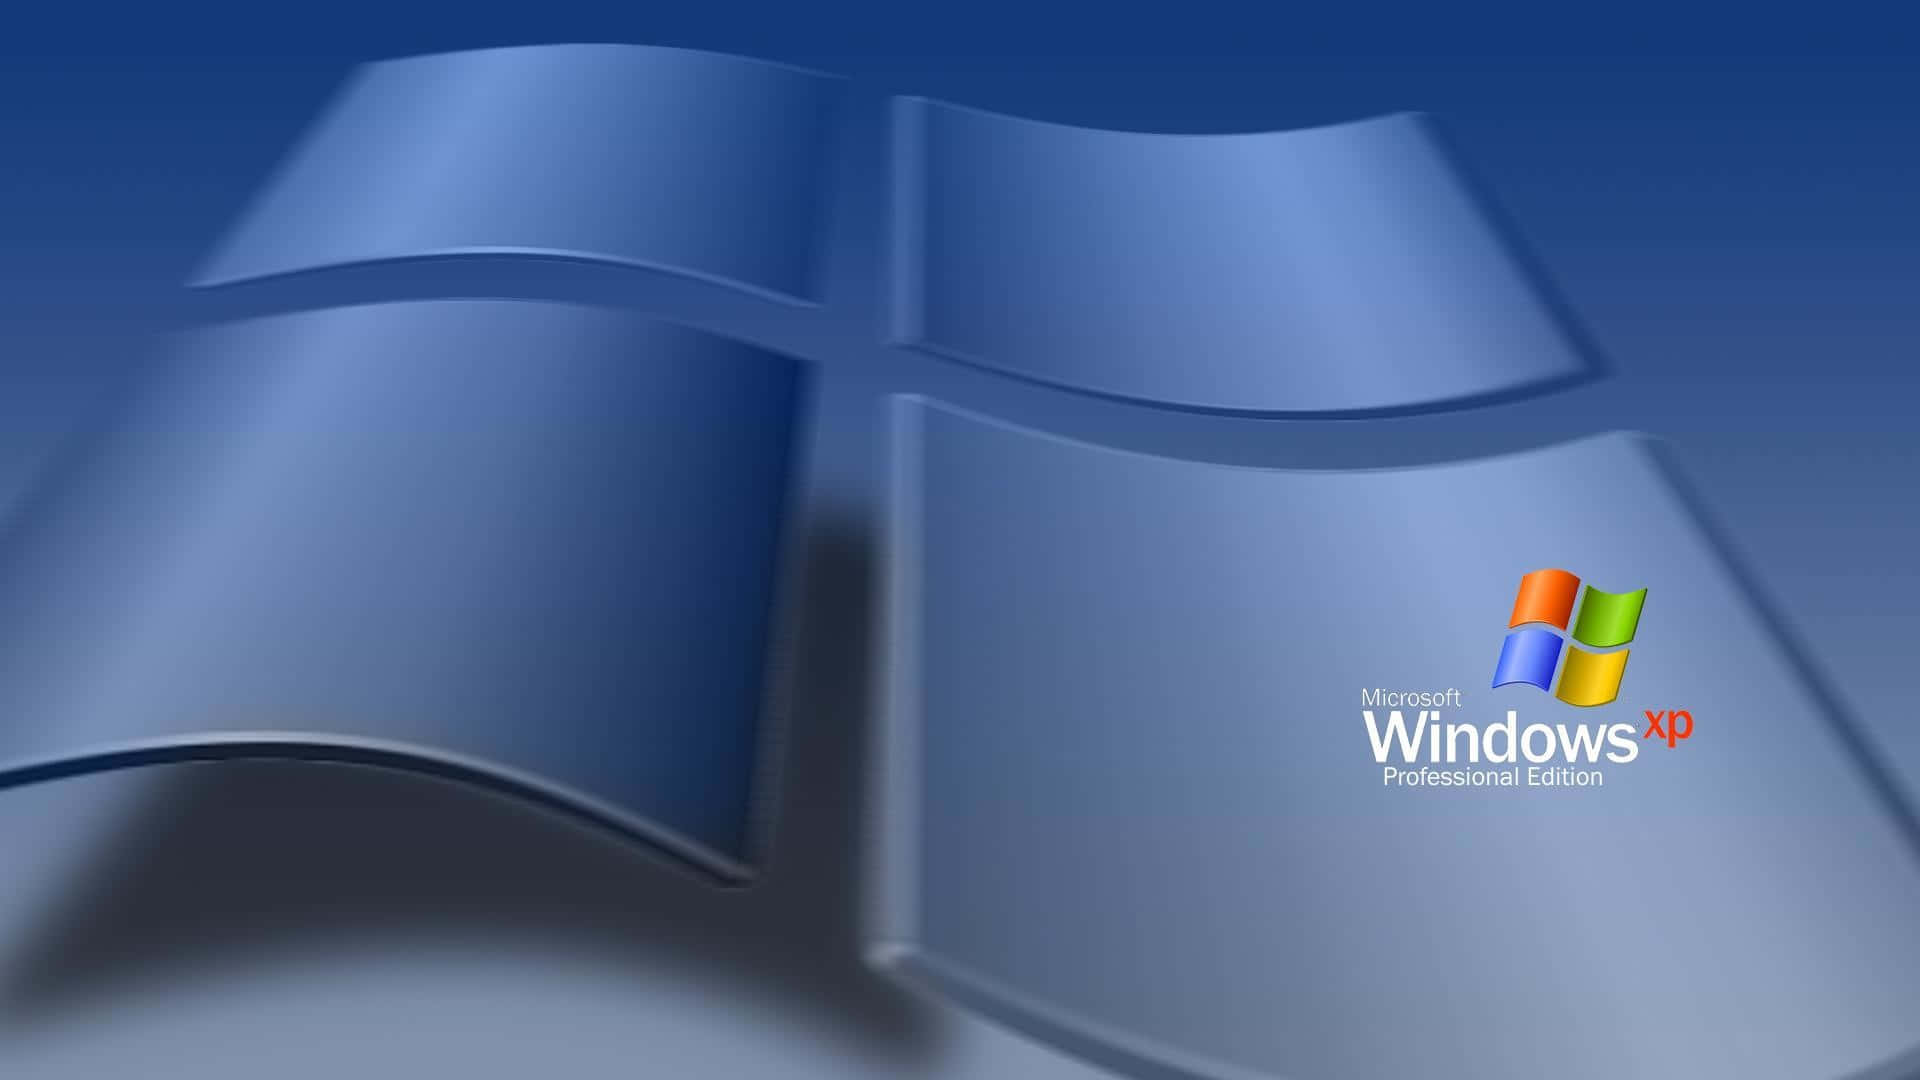 Windows Xp-logoet 1920 X 1080 Wallpaper